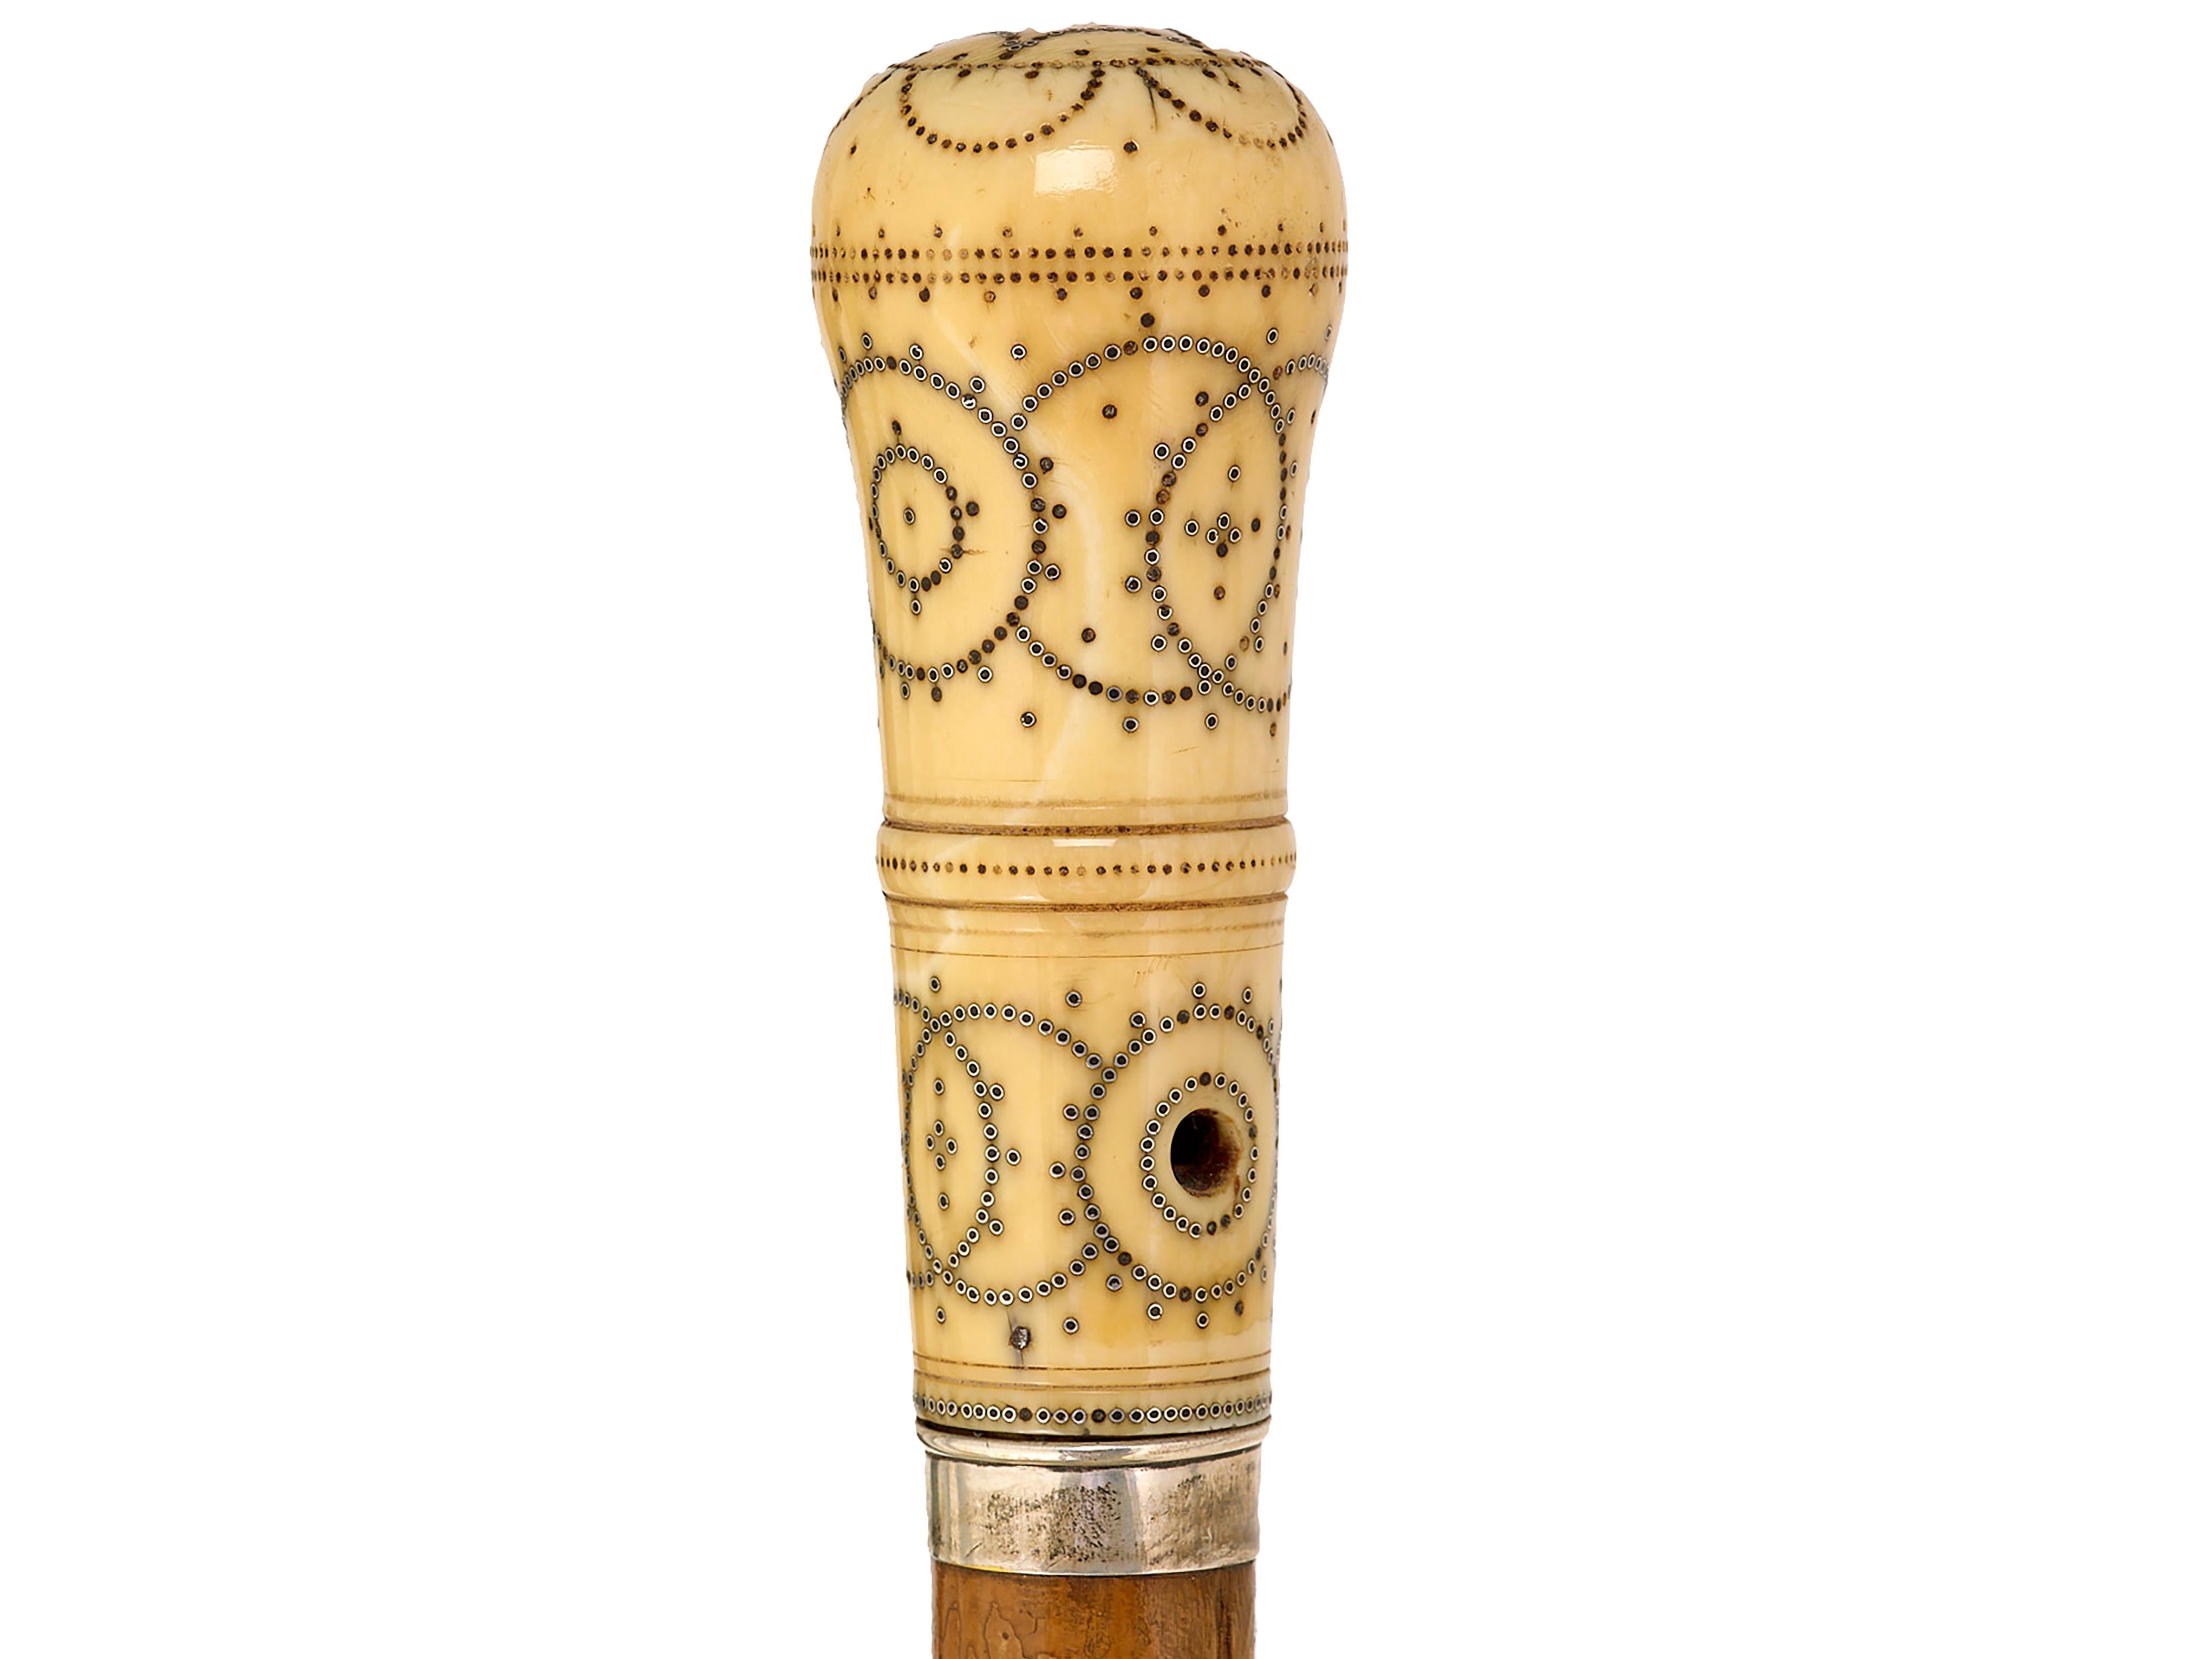 18th century cane